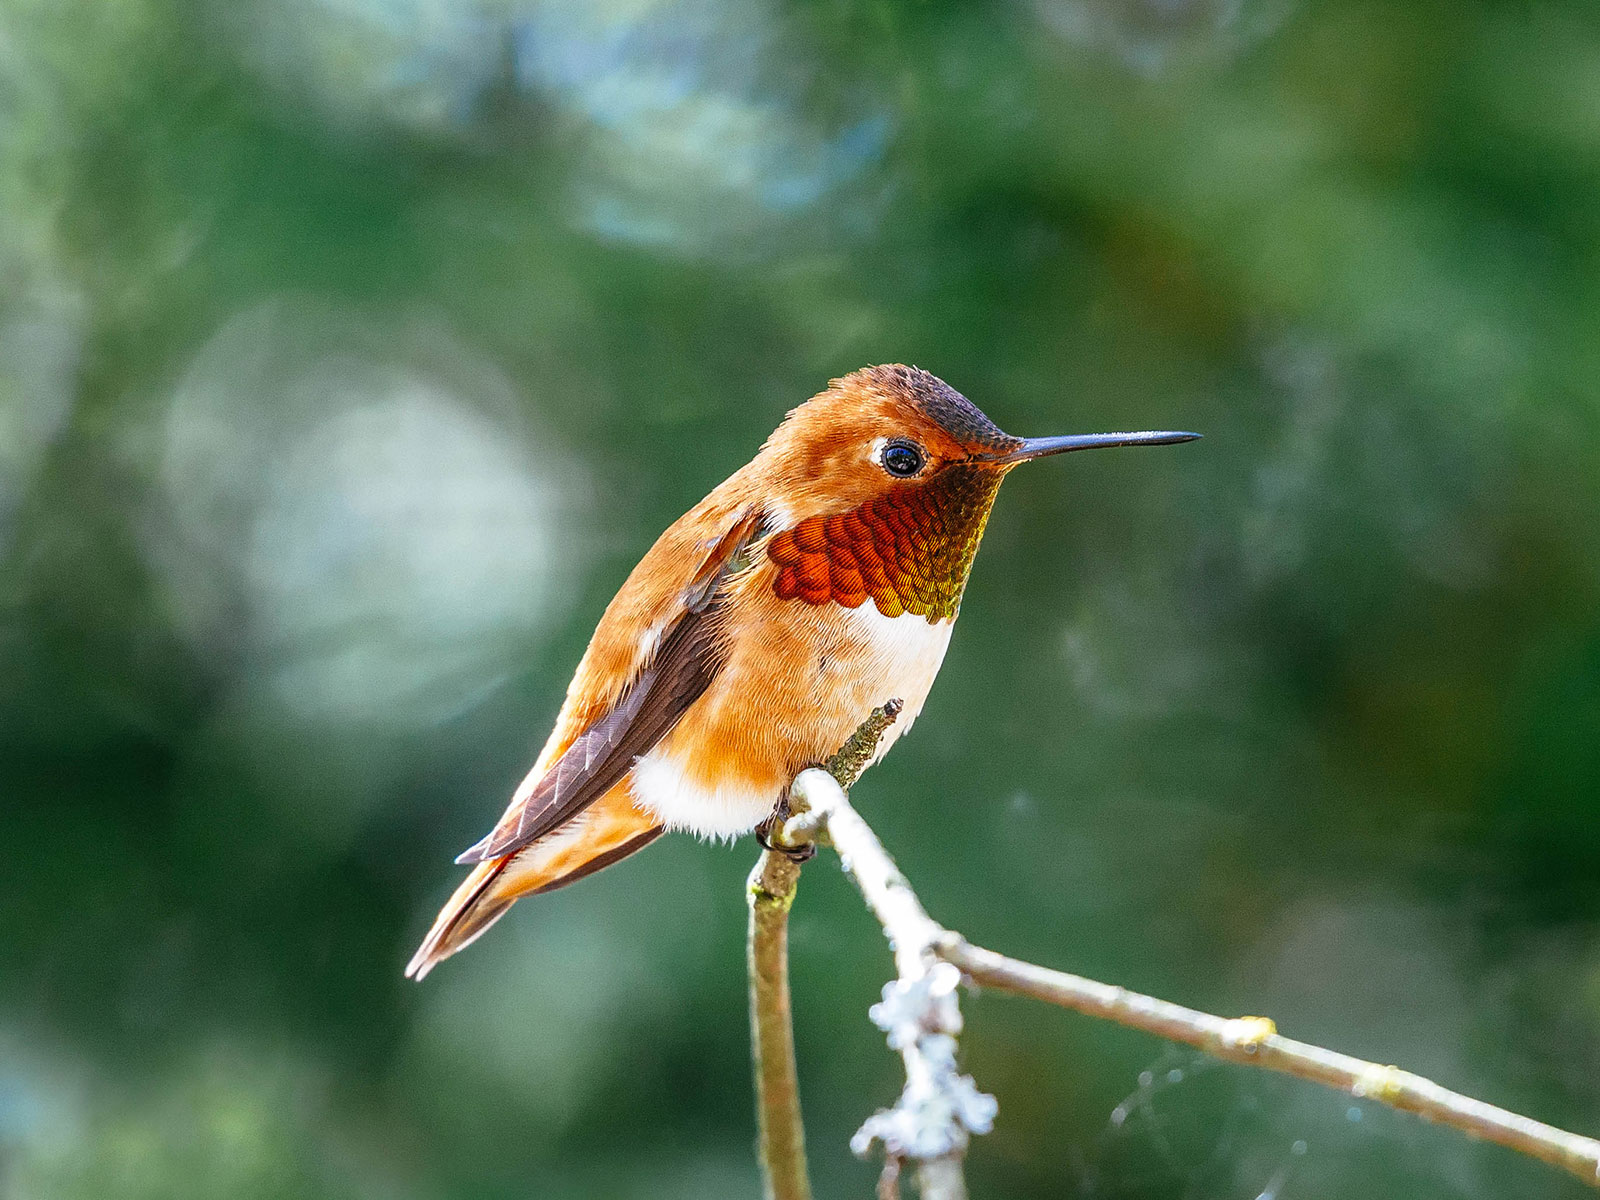 Rufous hummingbird on a thin tree branch